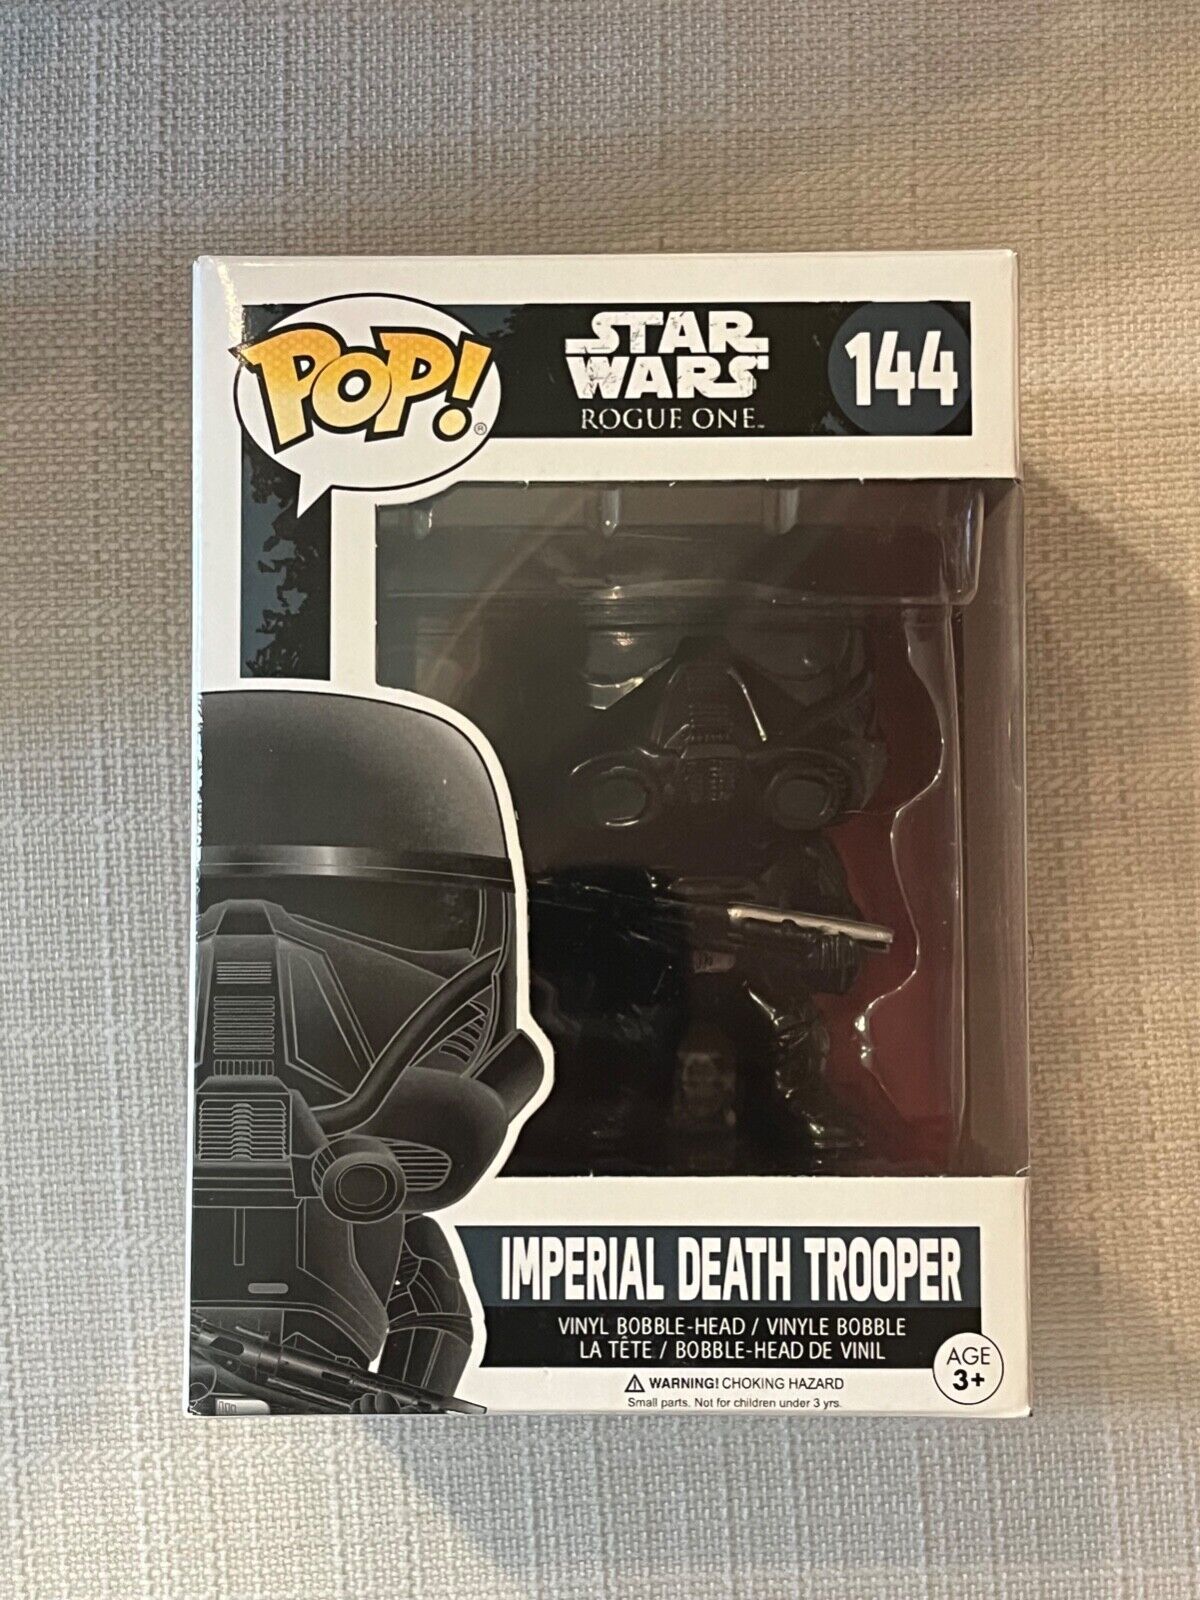 Funko Pop Vinyl Star Wars Rogue One Imperial Death Trooper #144 NIB Sealed